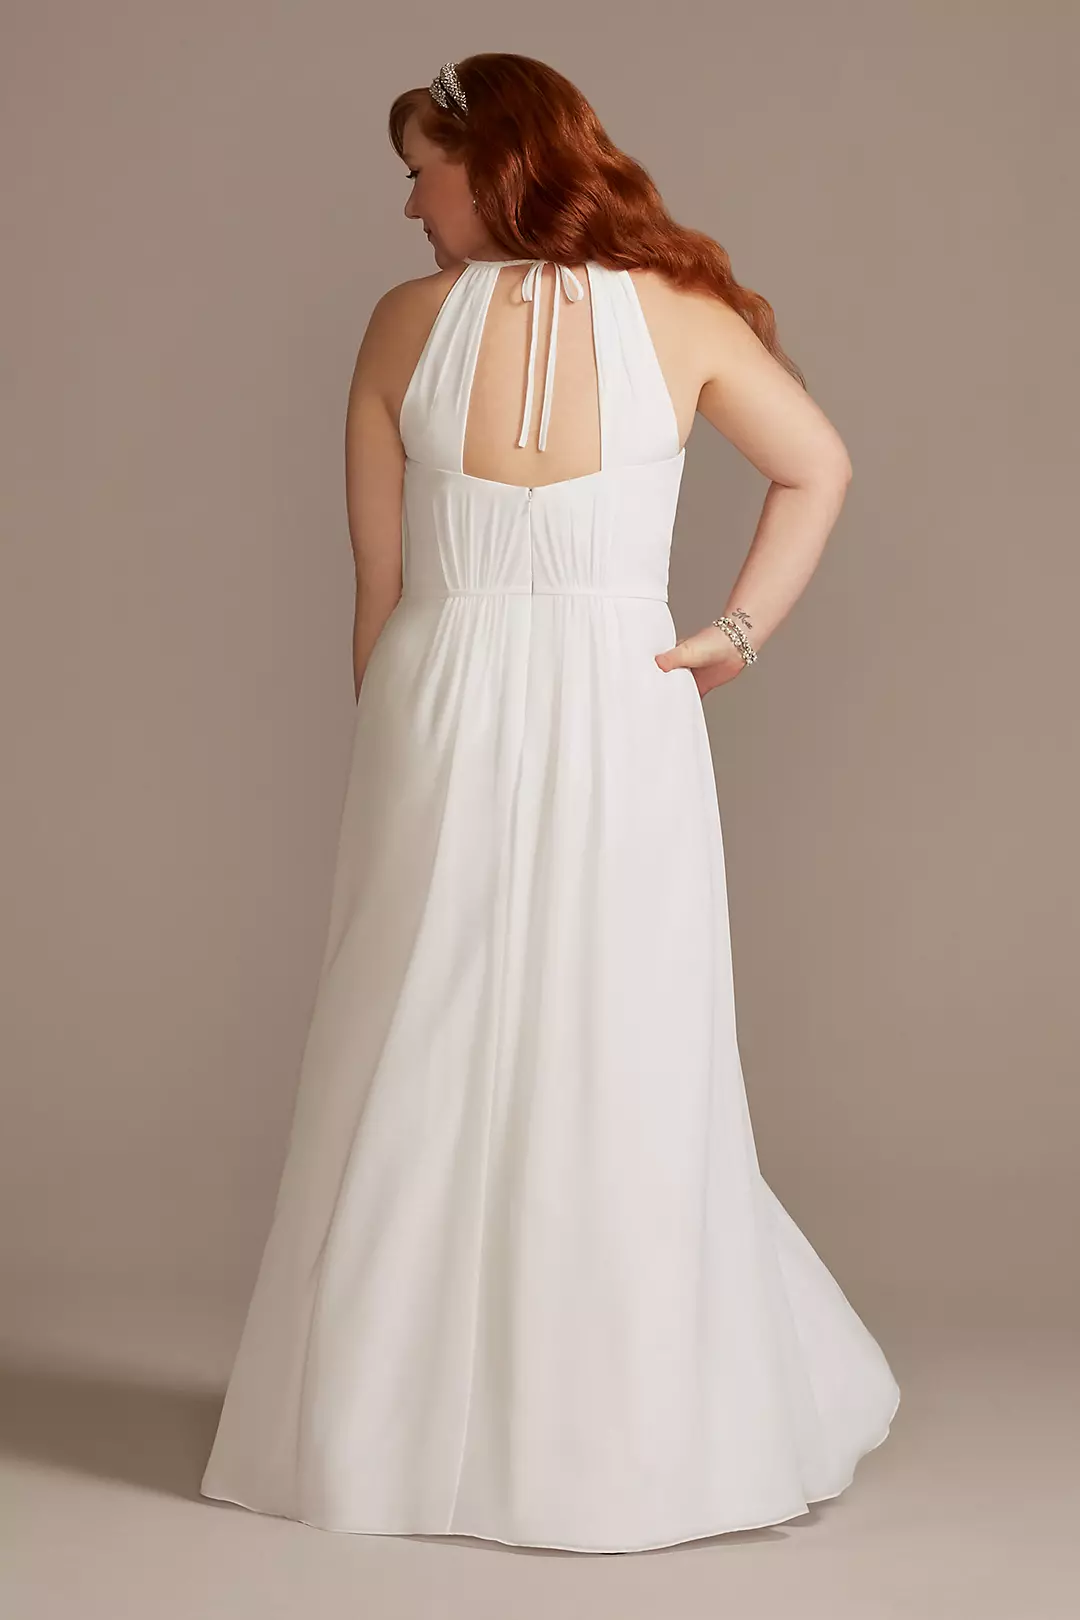 Chiffon A-Line Wedding Dress with Tie Back Image 2